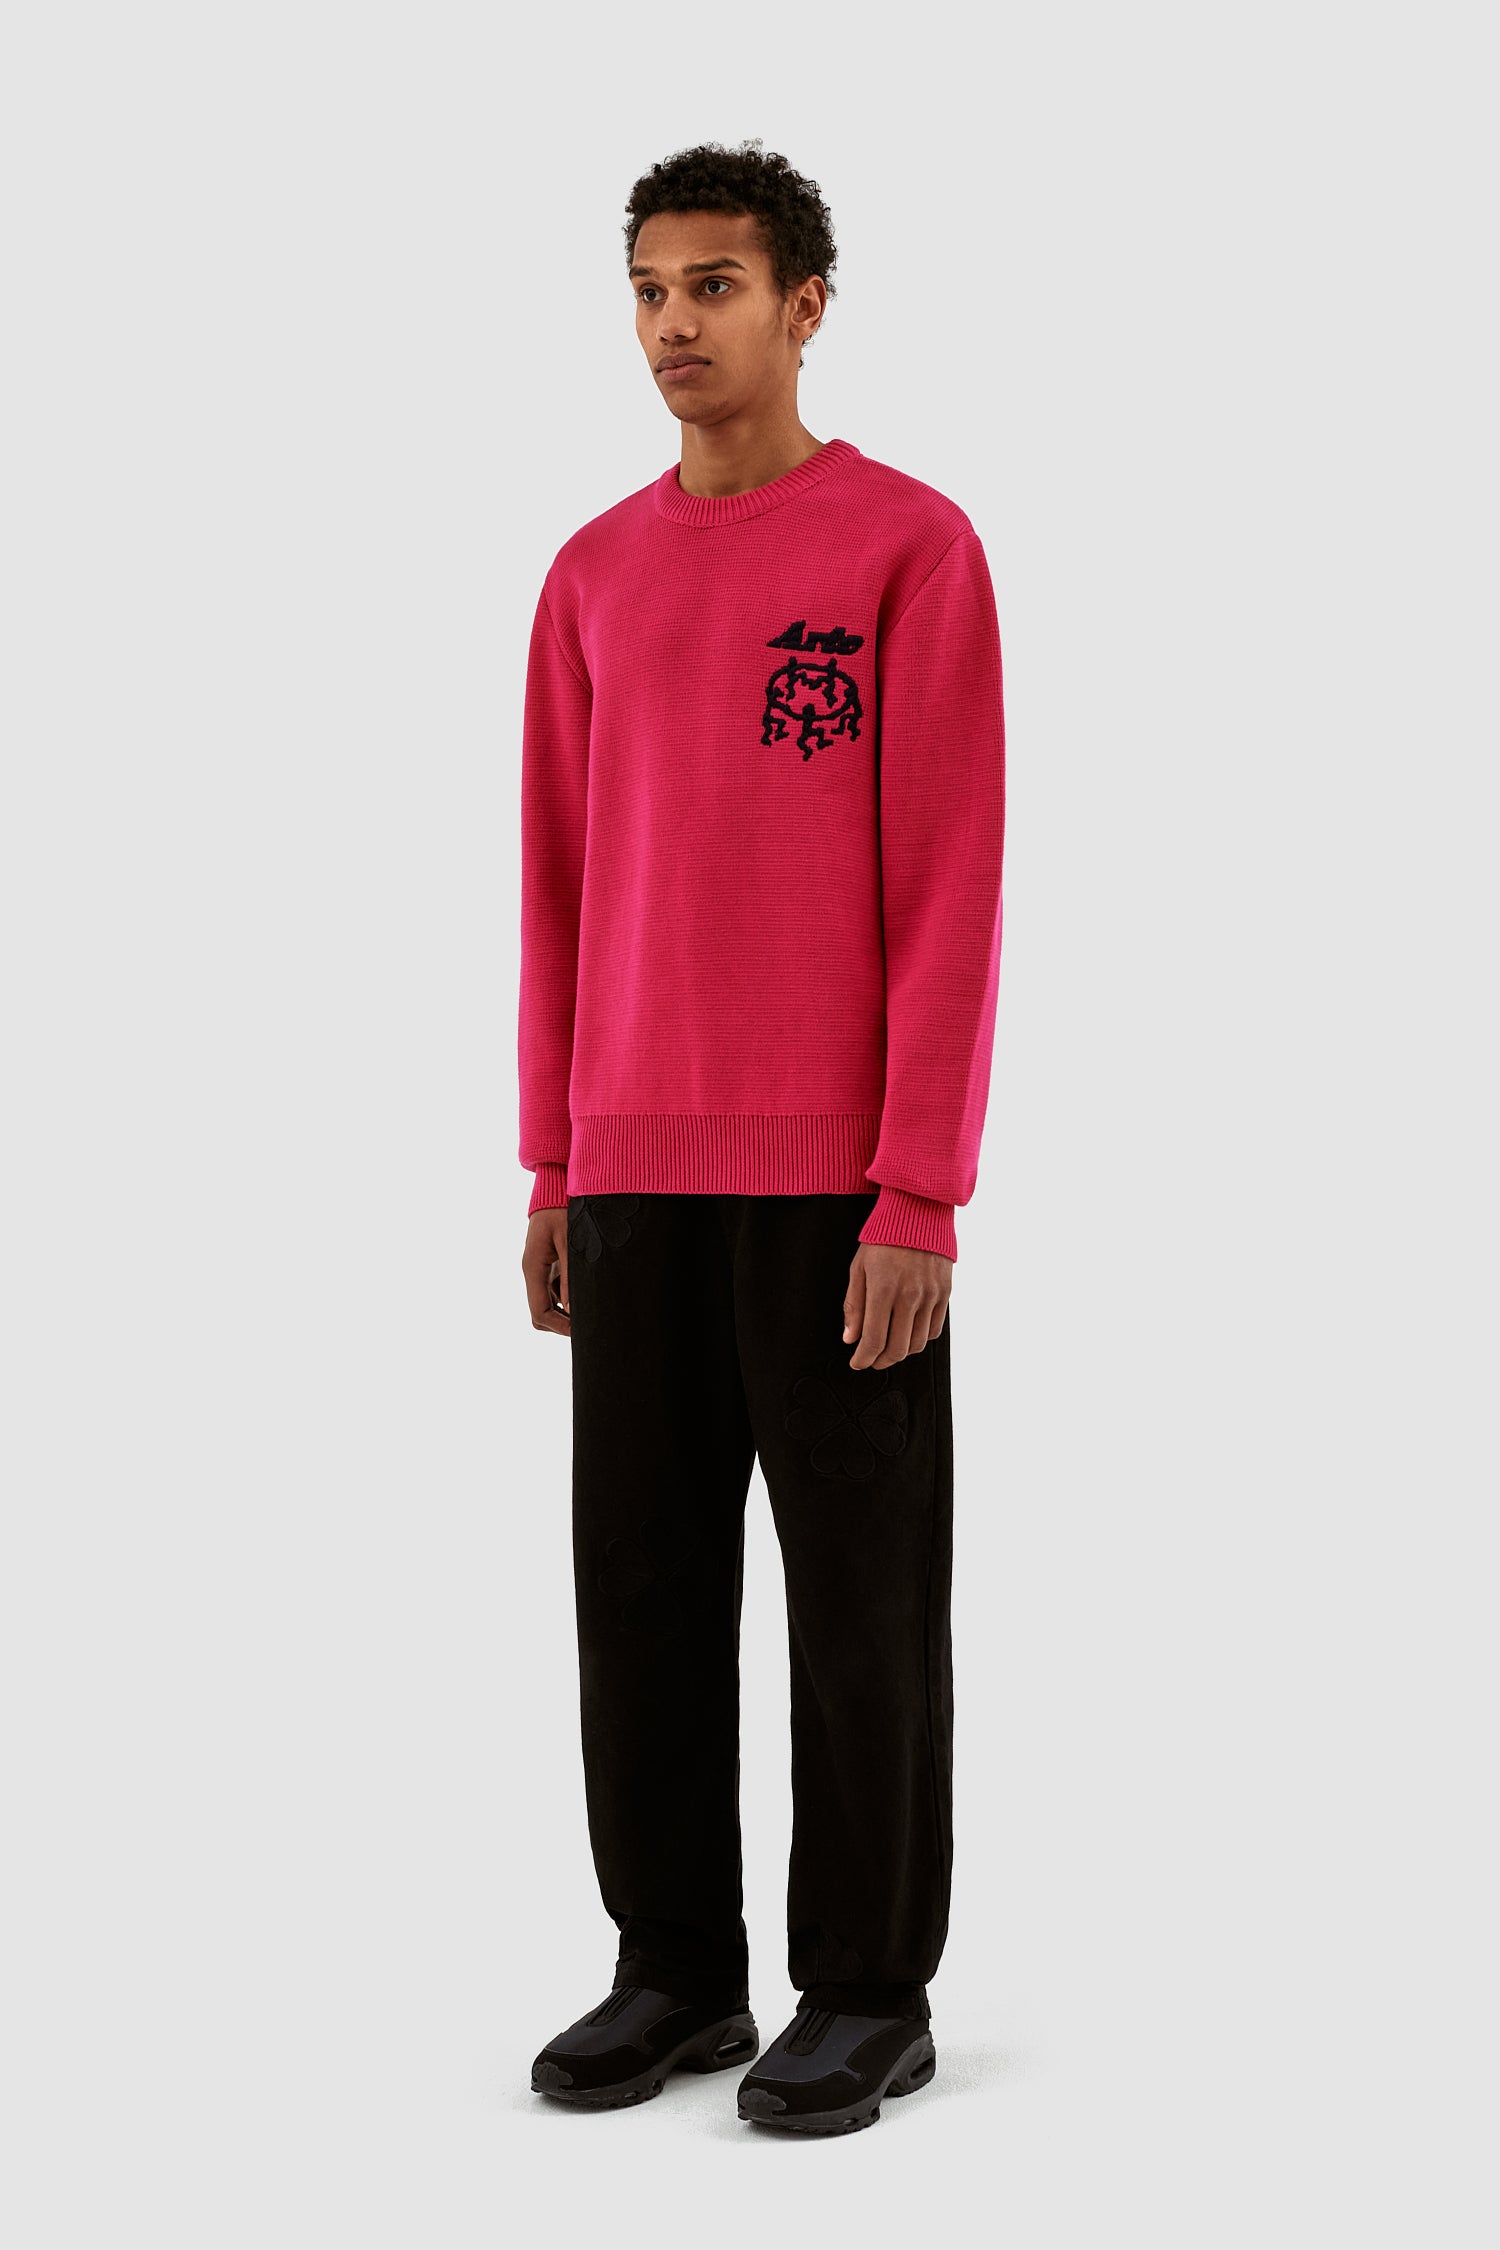 Kobe Small Dancers Sweater - Pink